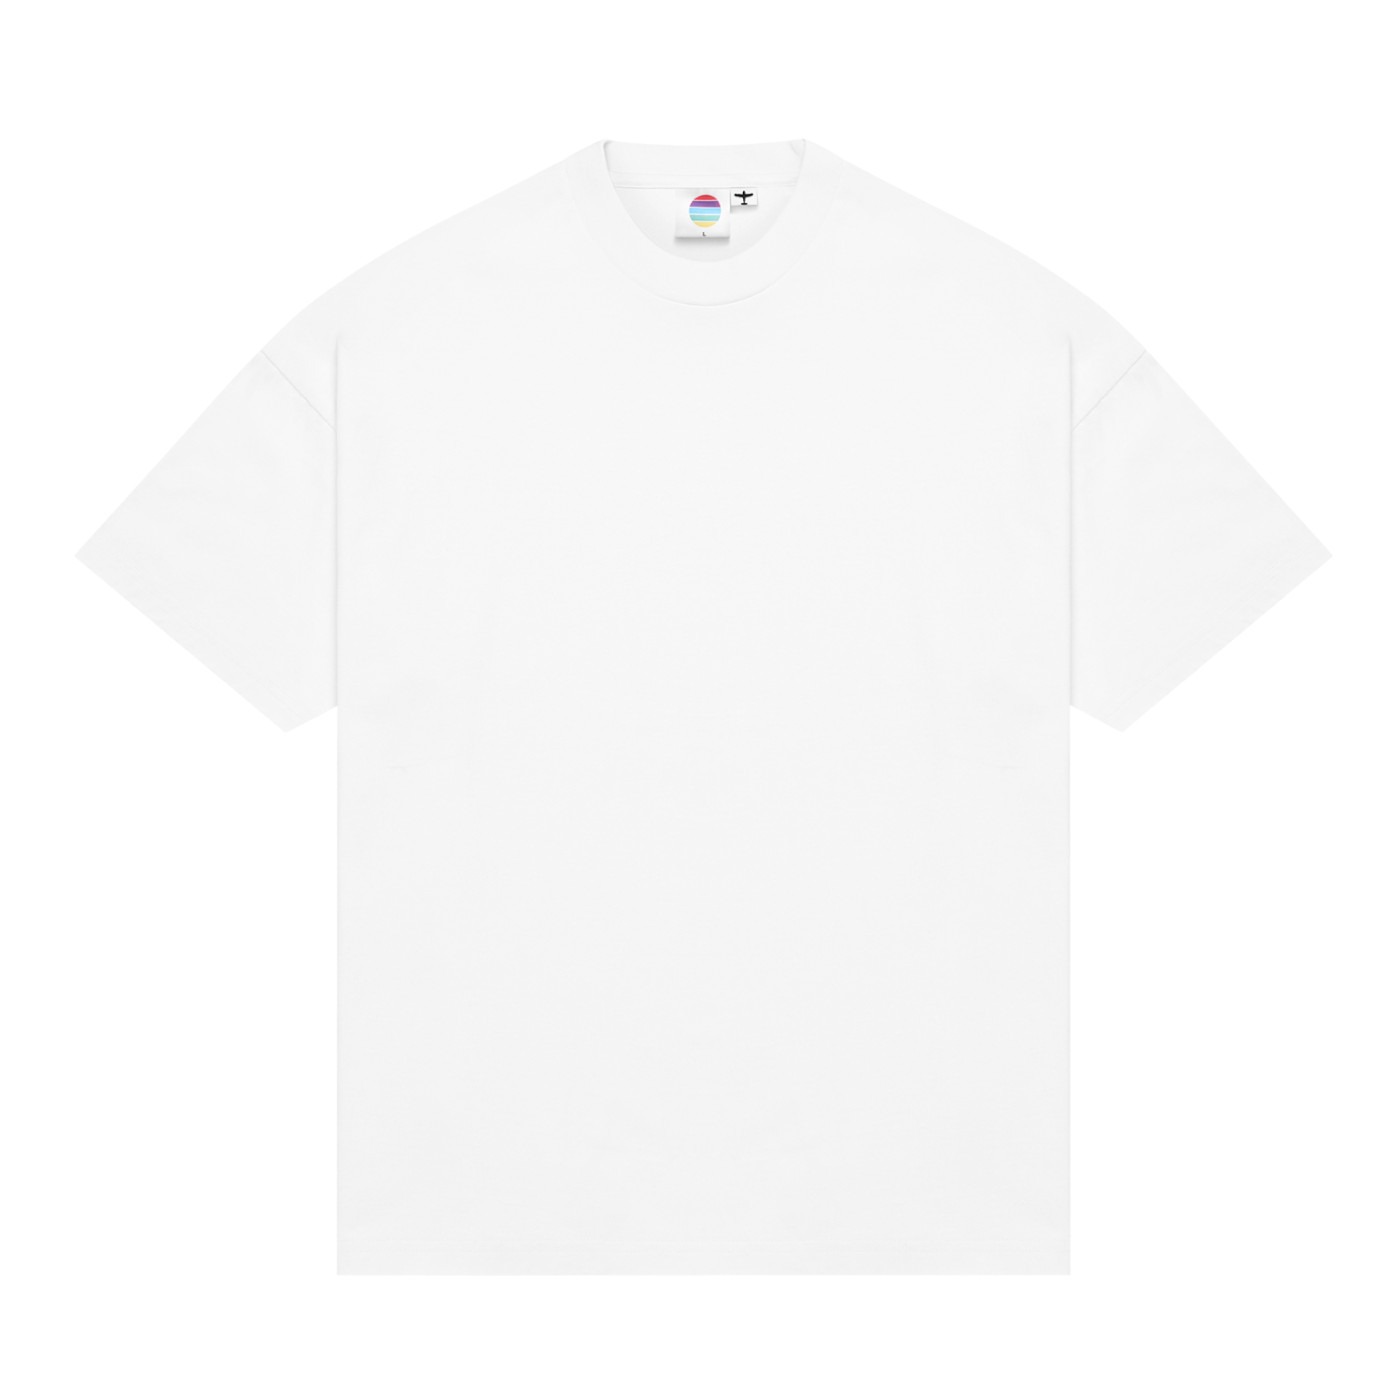 Flatlay of heavyweight white t-shirt